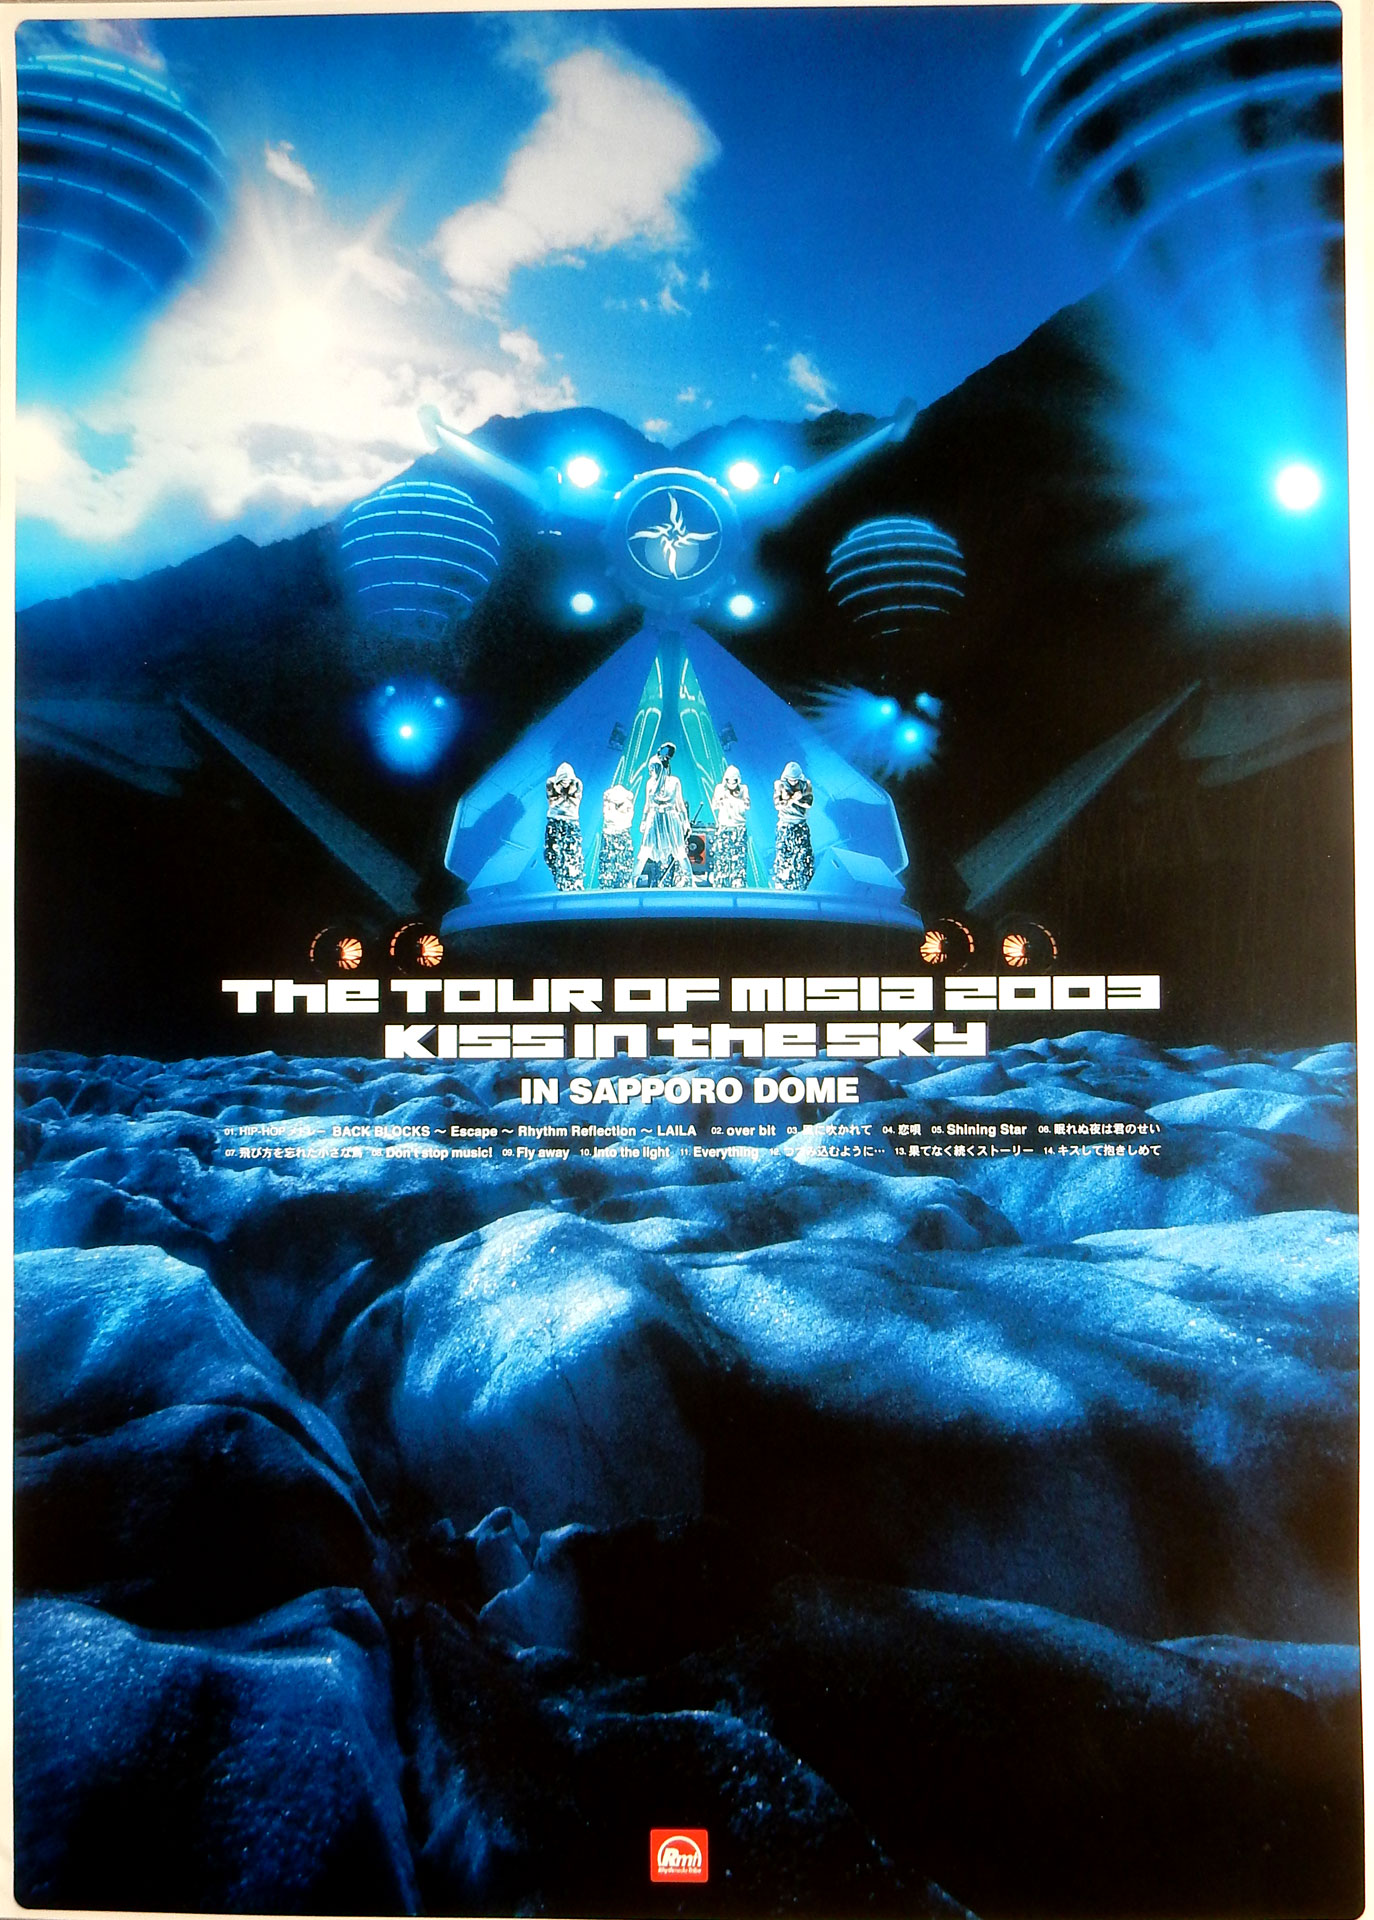 THE TOUR OF MISIA 2003 KISS IN THE SKY IN SAPPORO DOMEのポスター